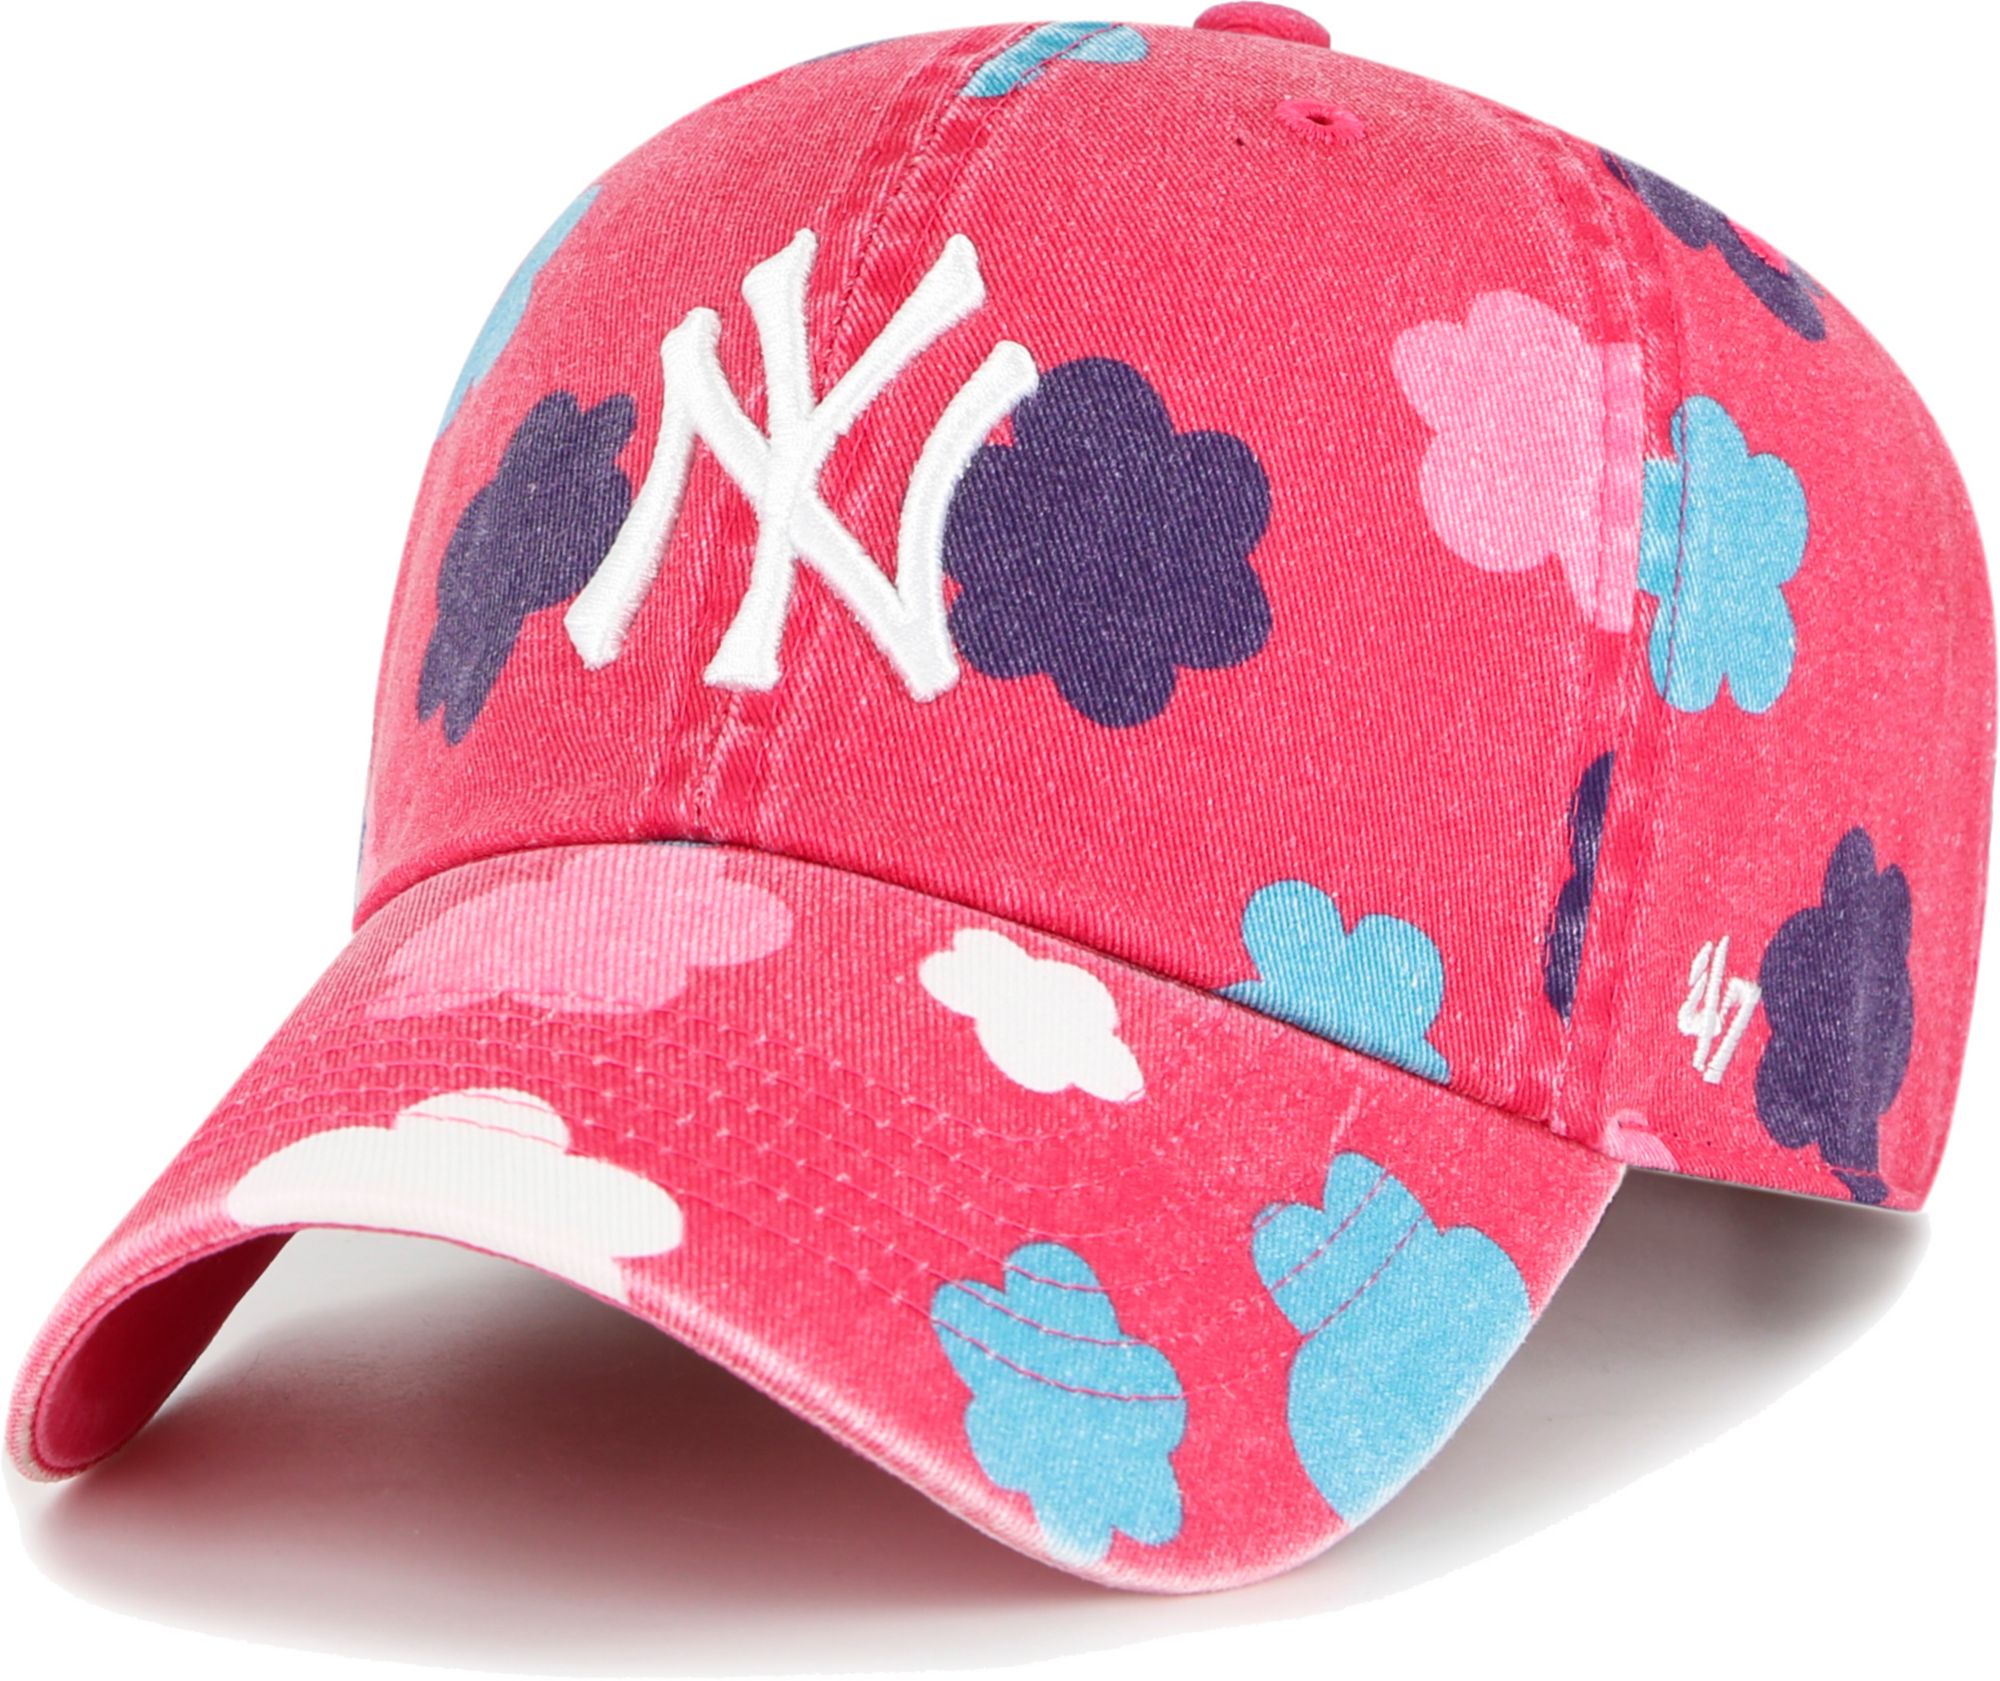 47 Brand Men's New York Yankees Camo Cleanup Adjustable Hat